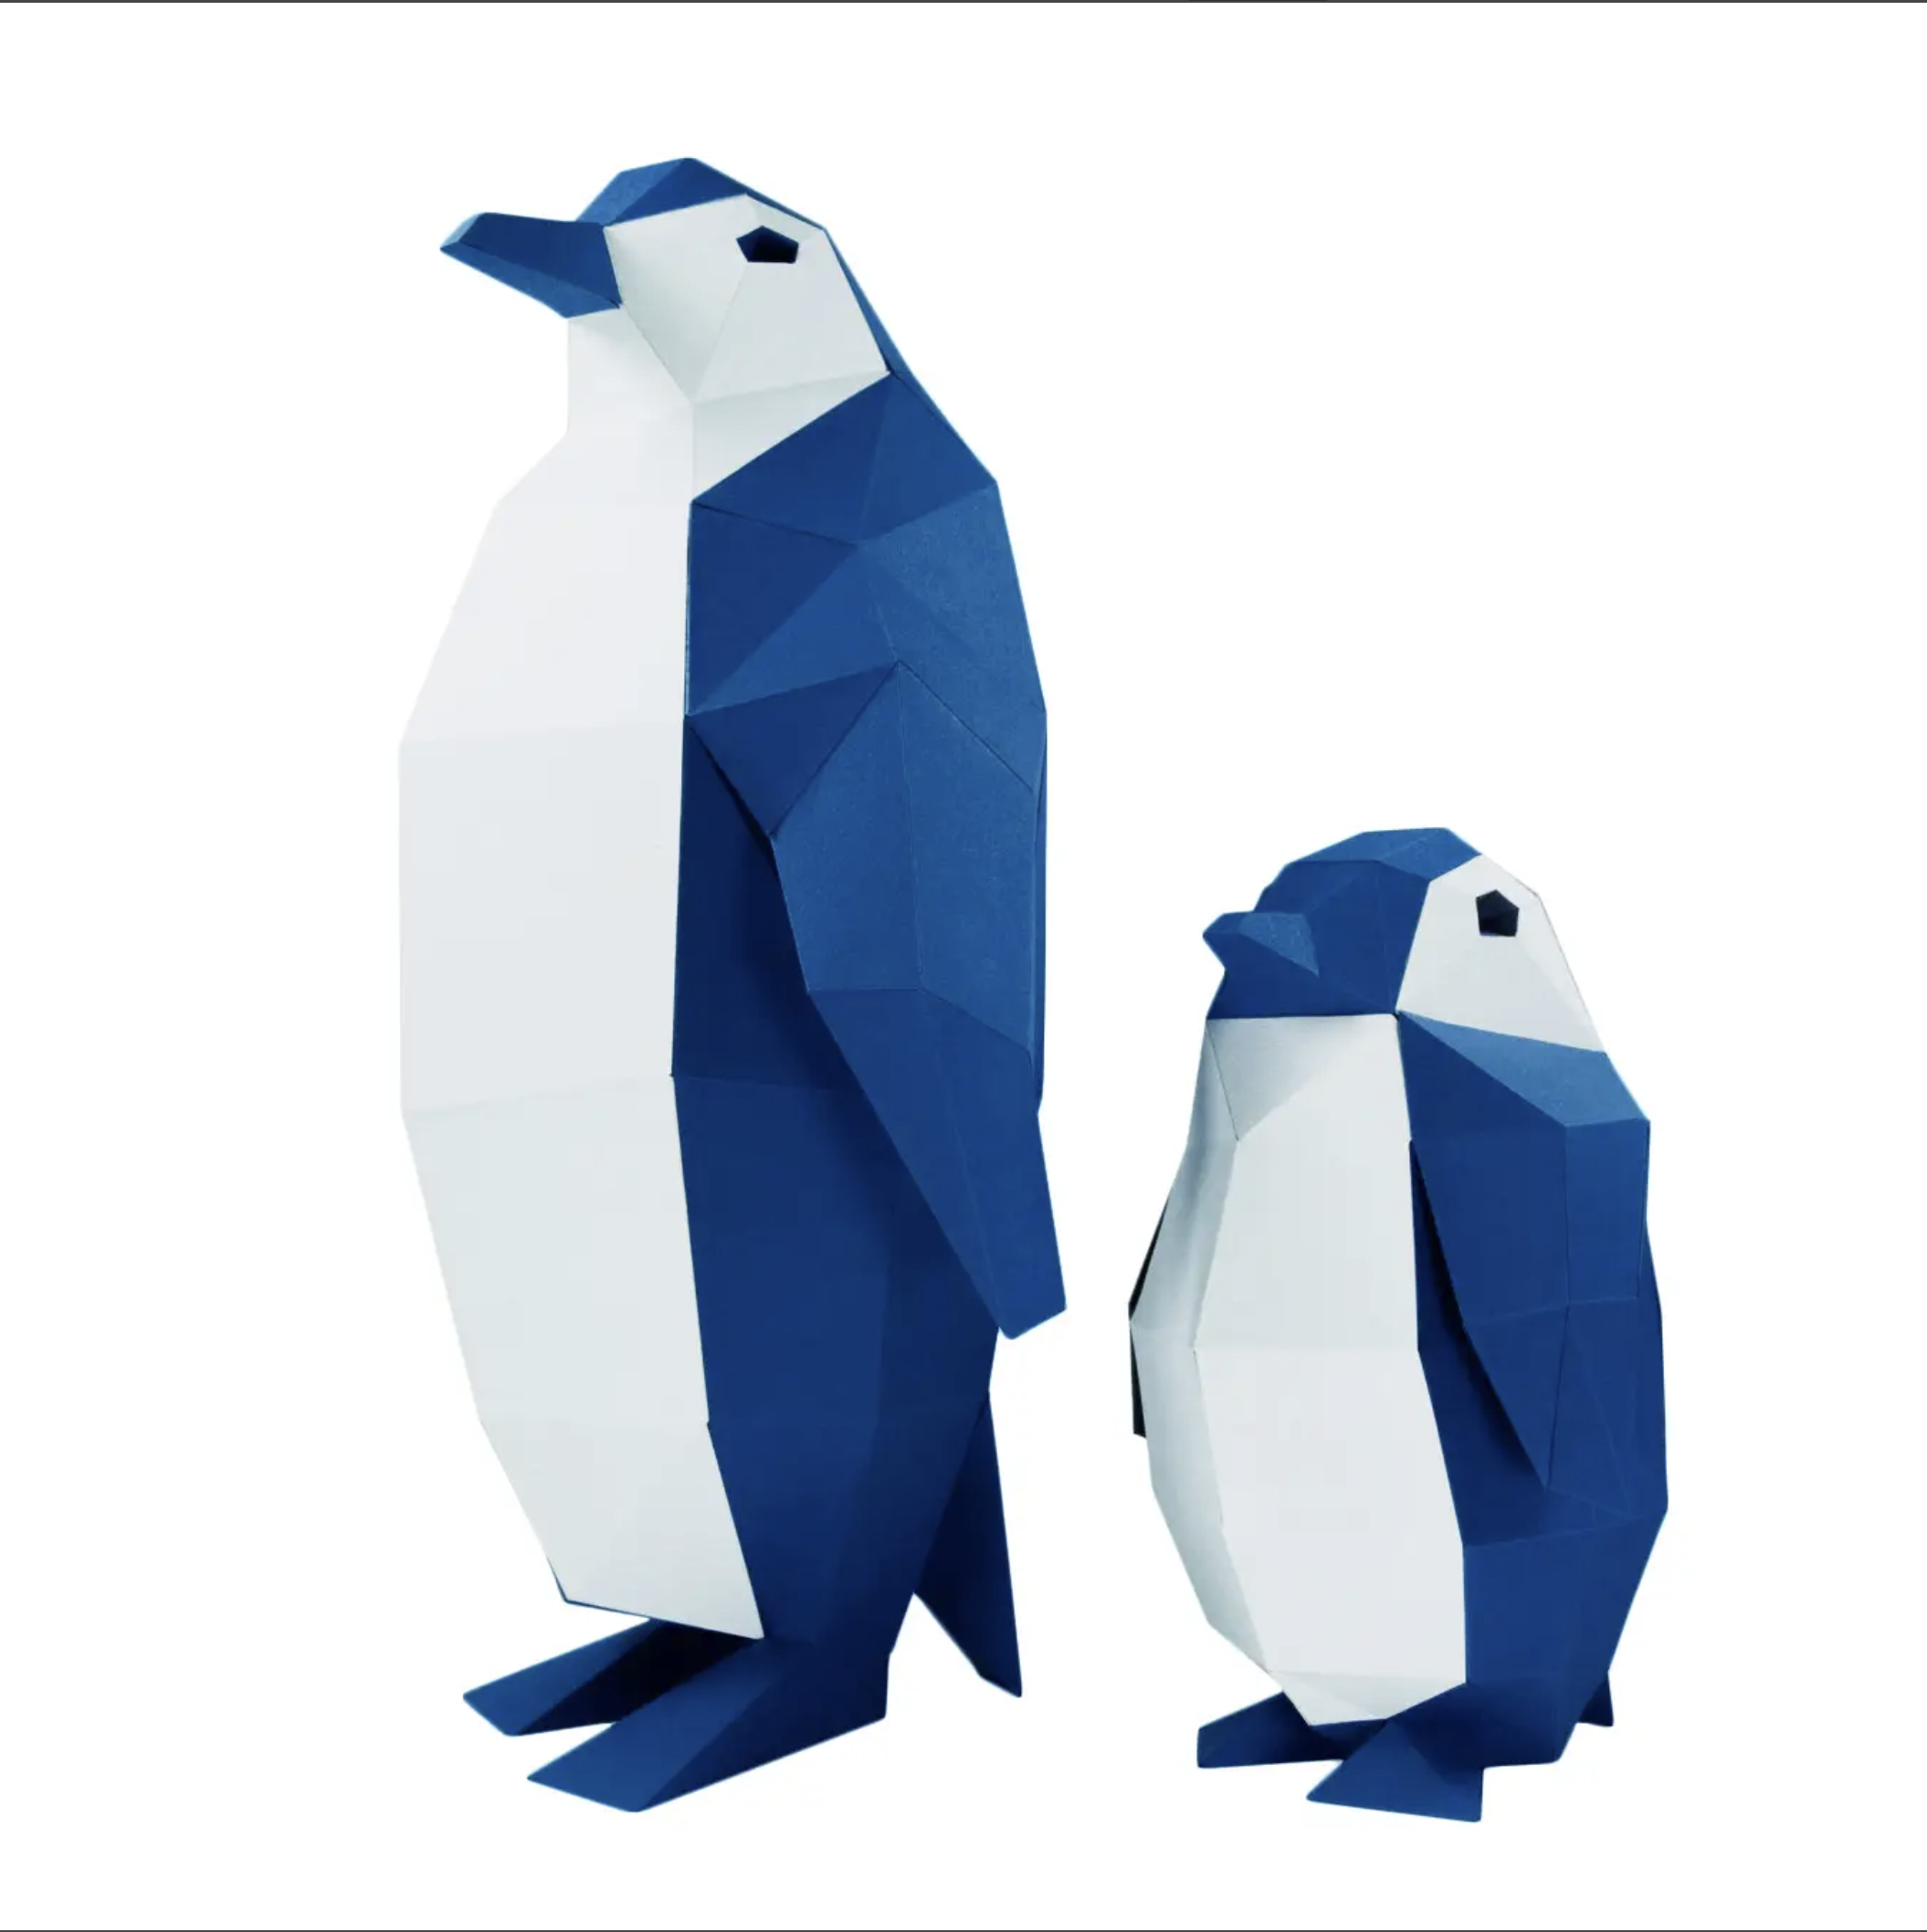 Papercraft World 3D Papercraft Wall Art Diy Kit Penguins